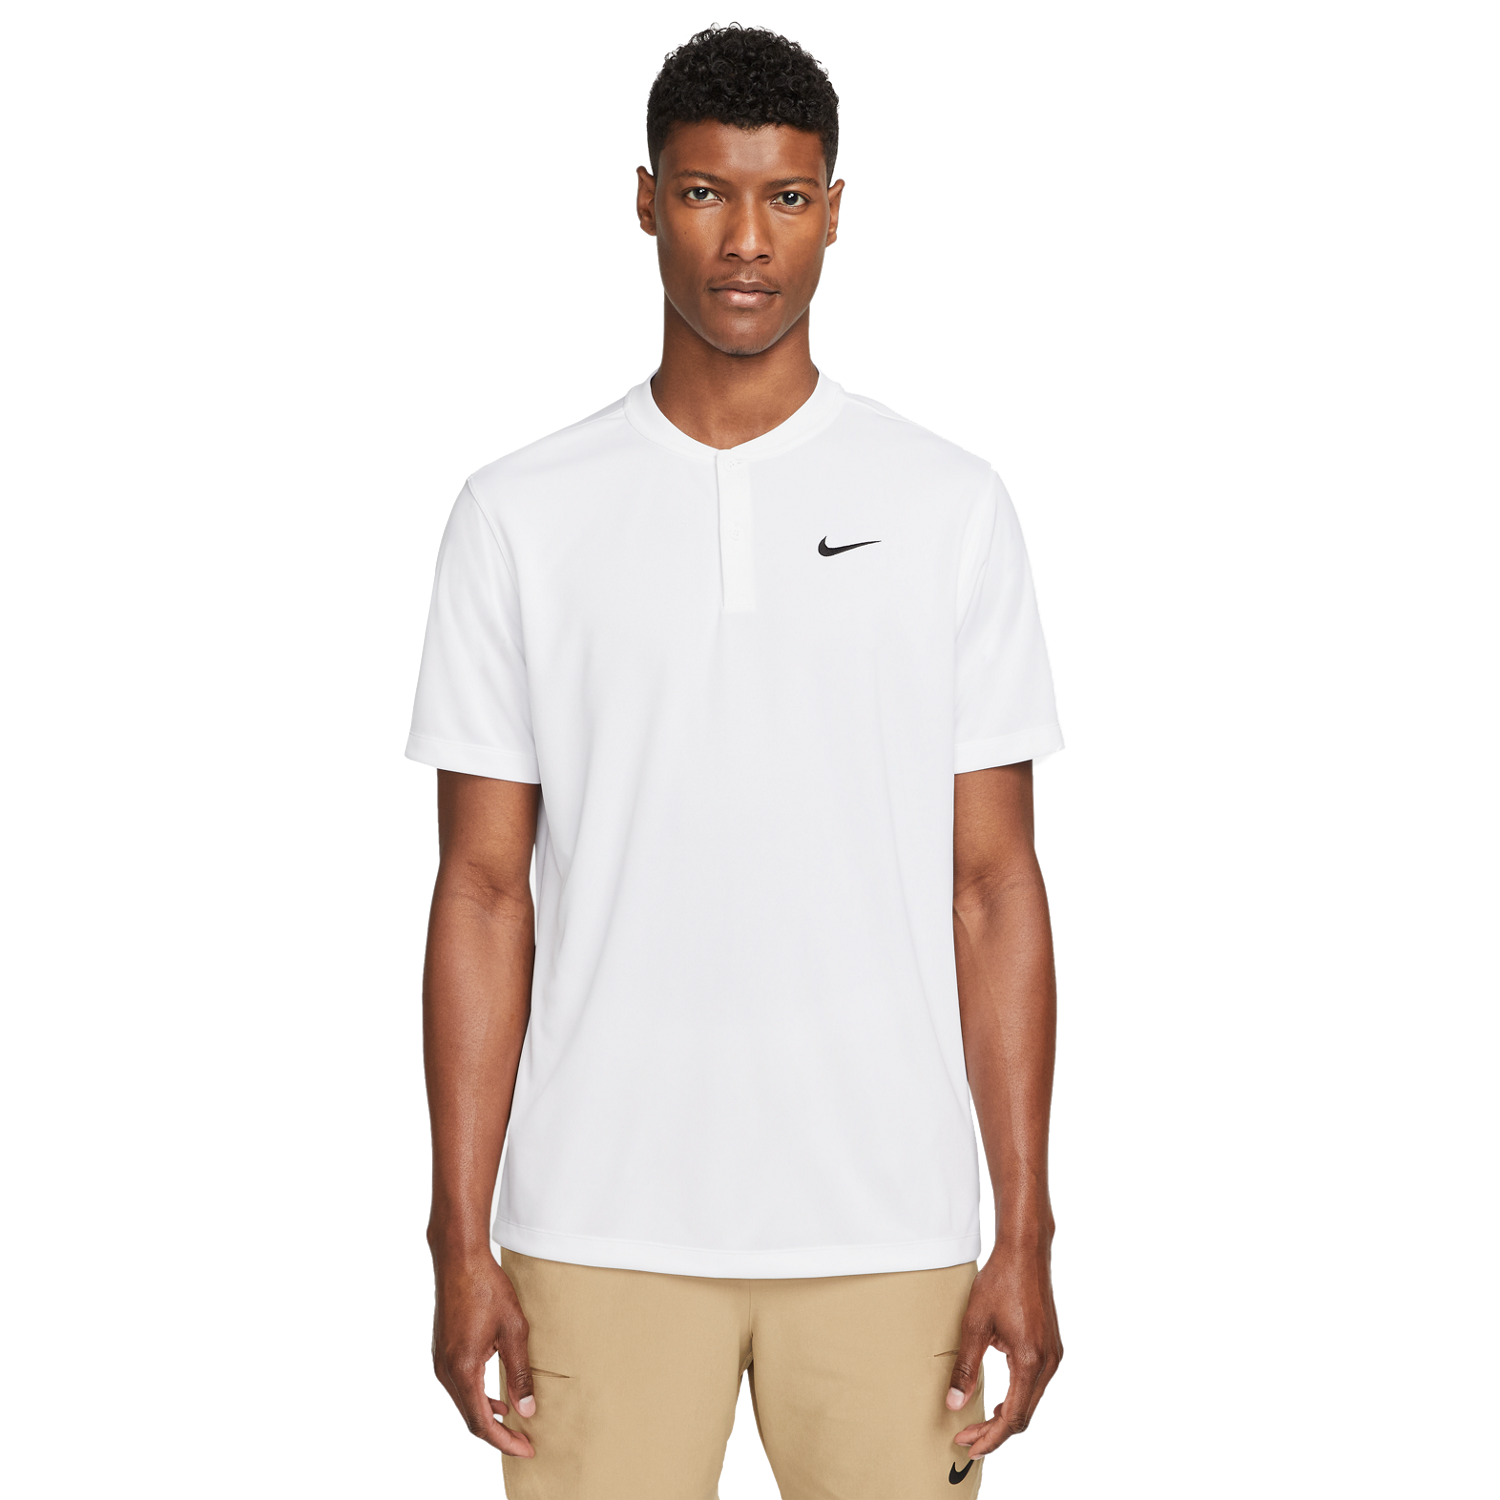 Buy Nike Court Victory Dry T-Shirt Men White online